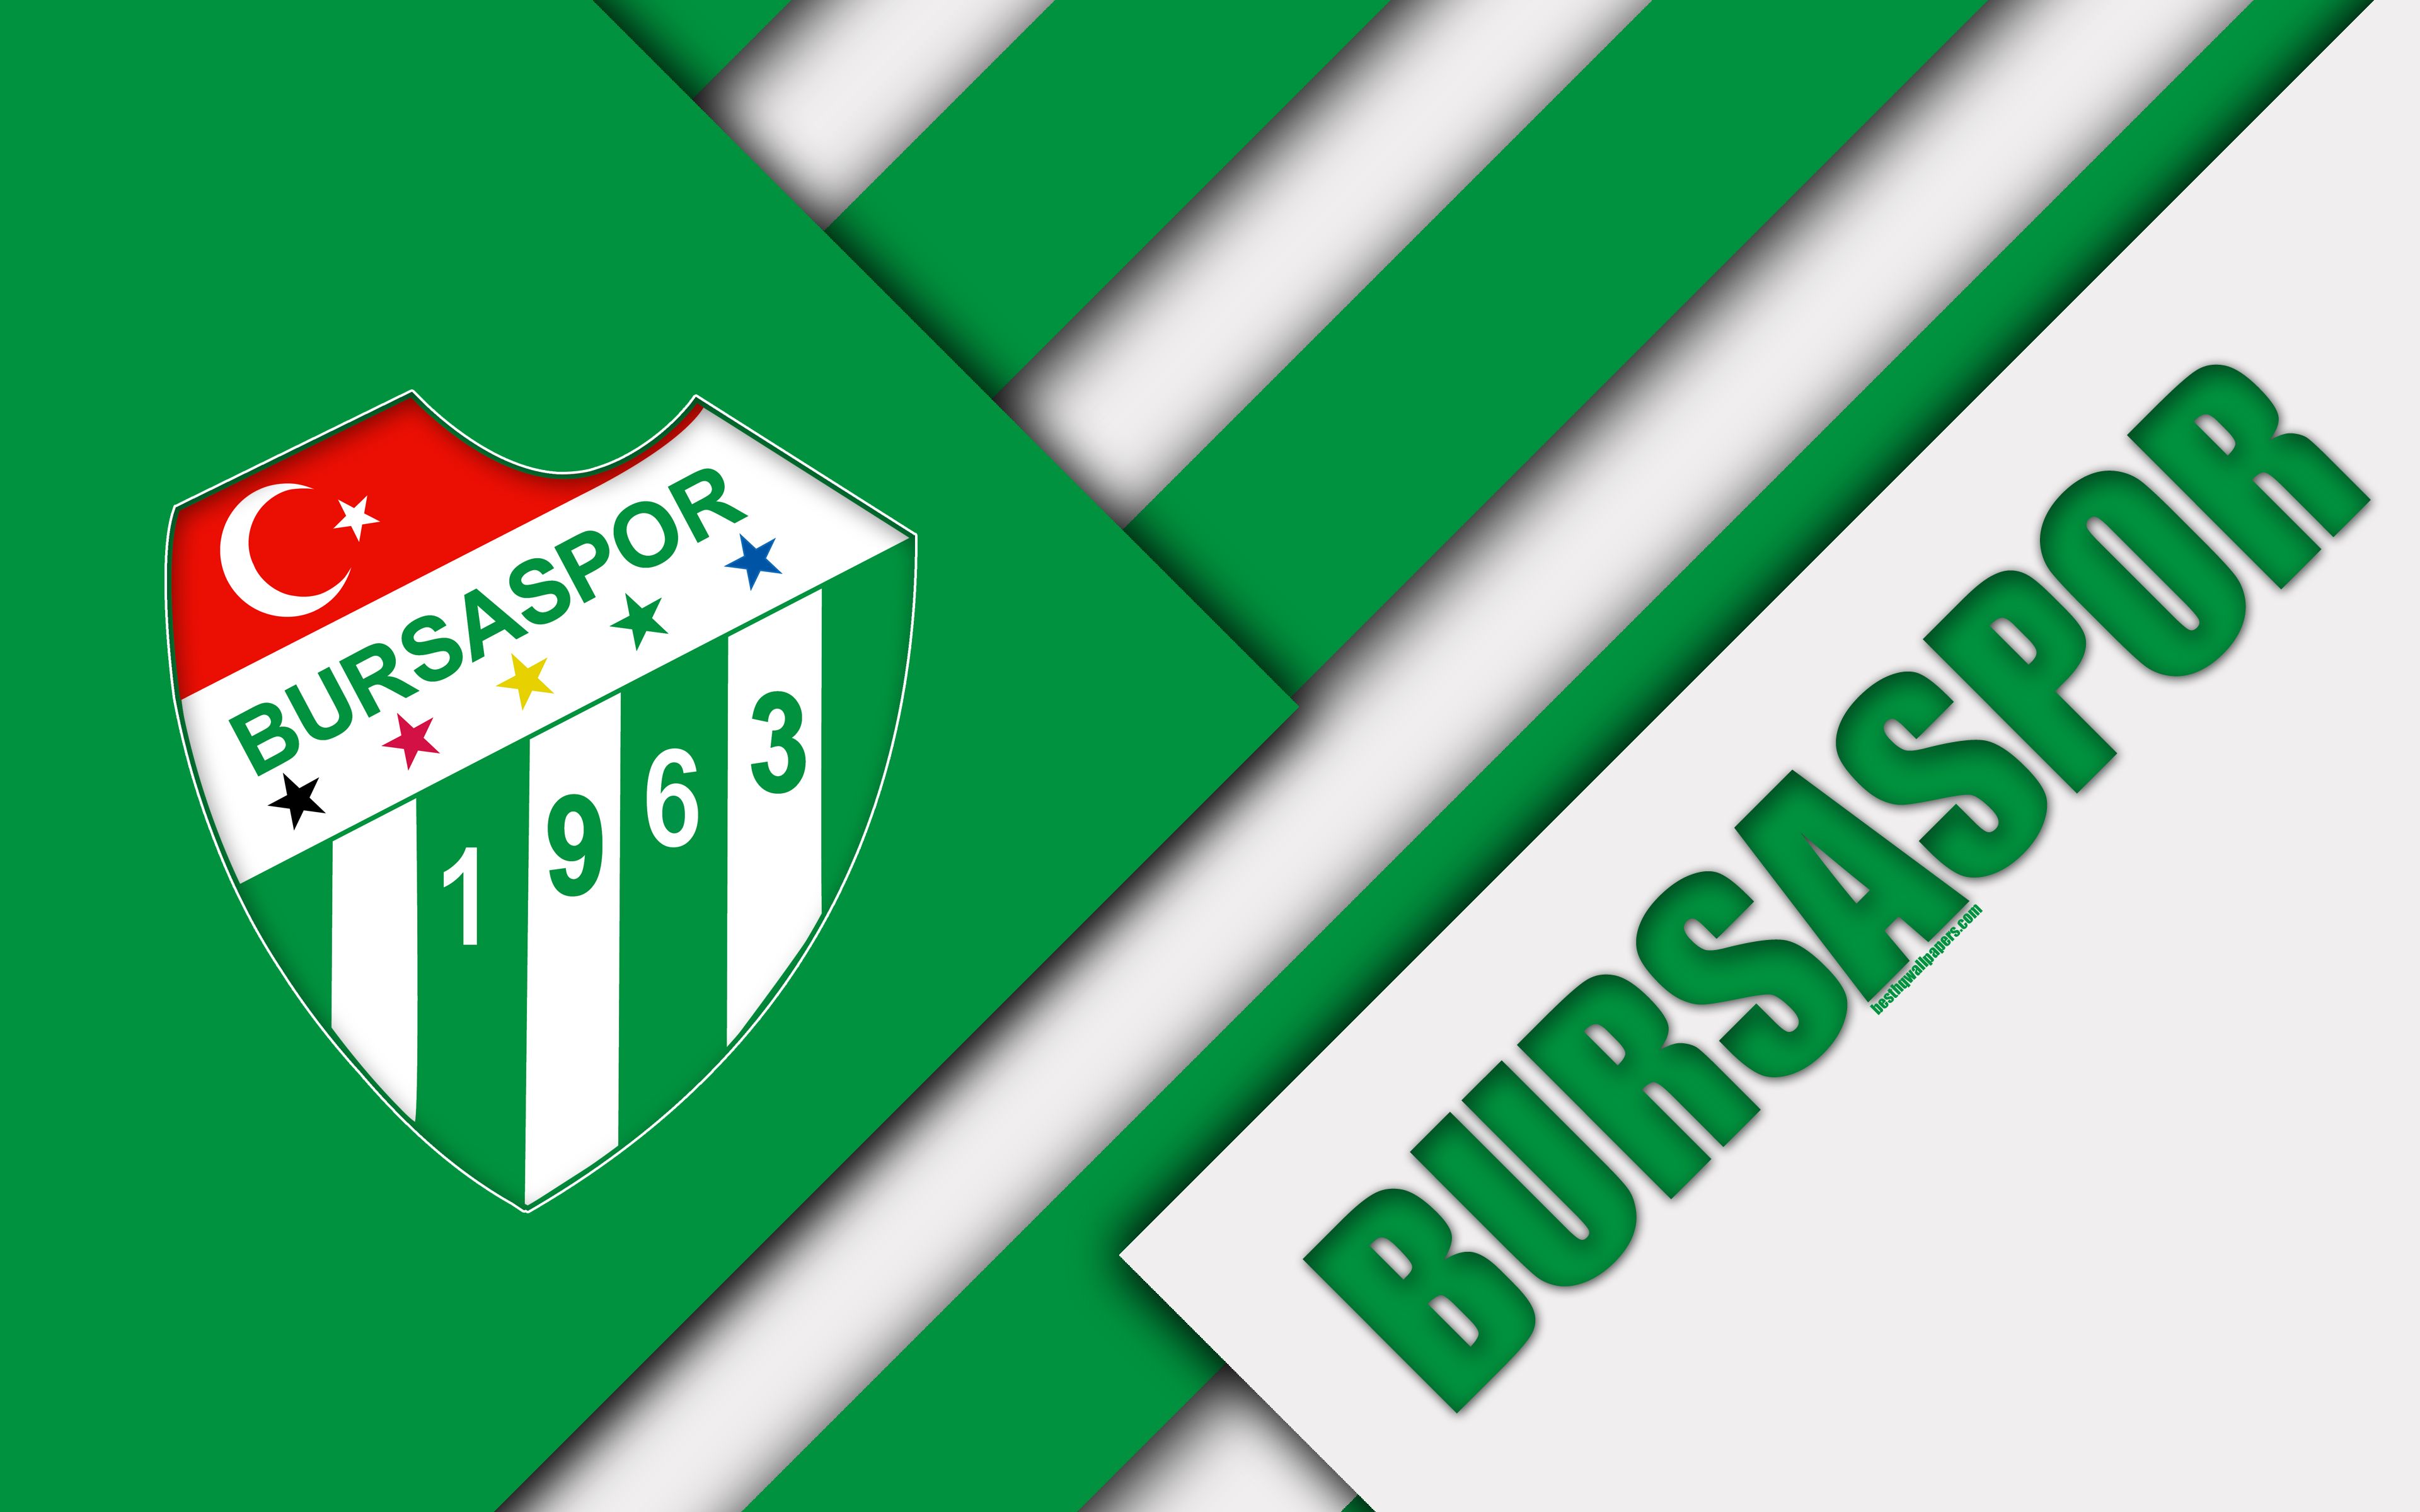 Bursaspor Fc, Emblem, 4k, Material Design, Turkish